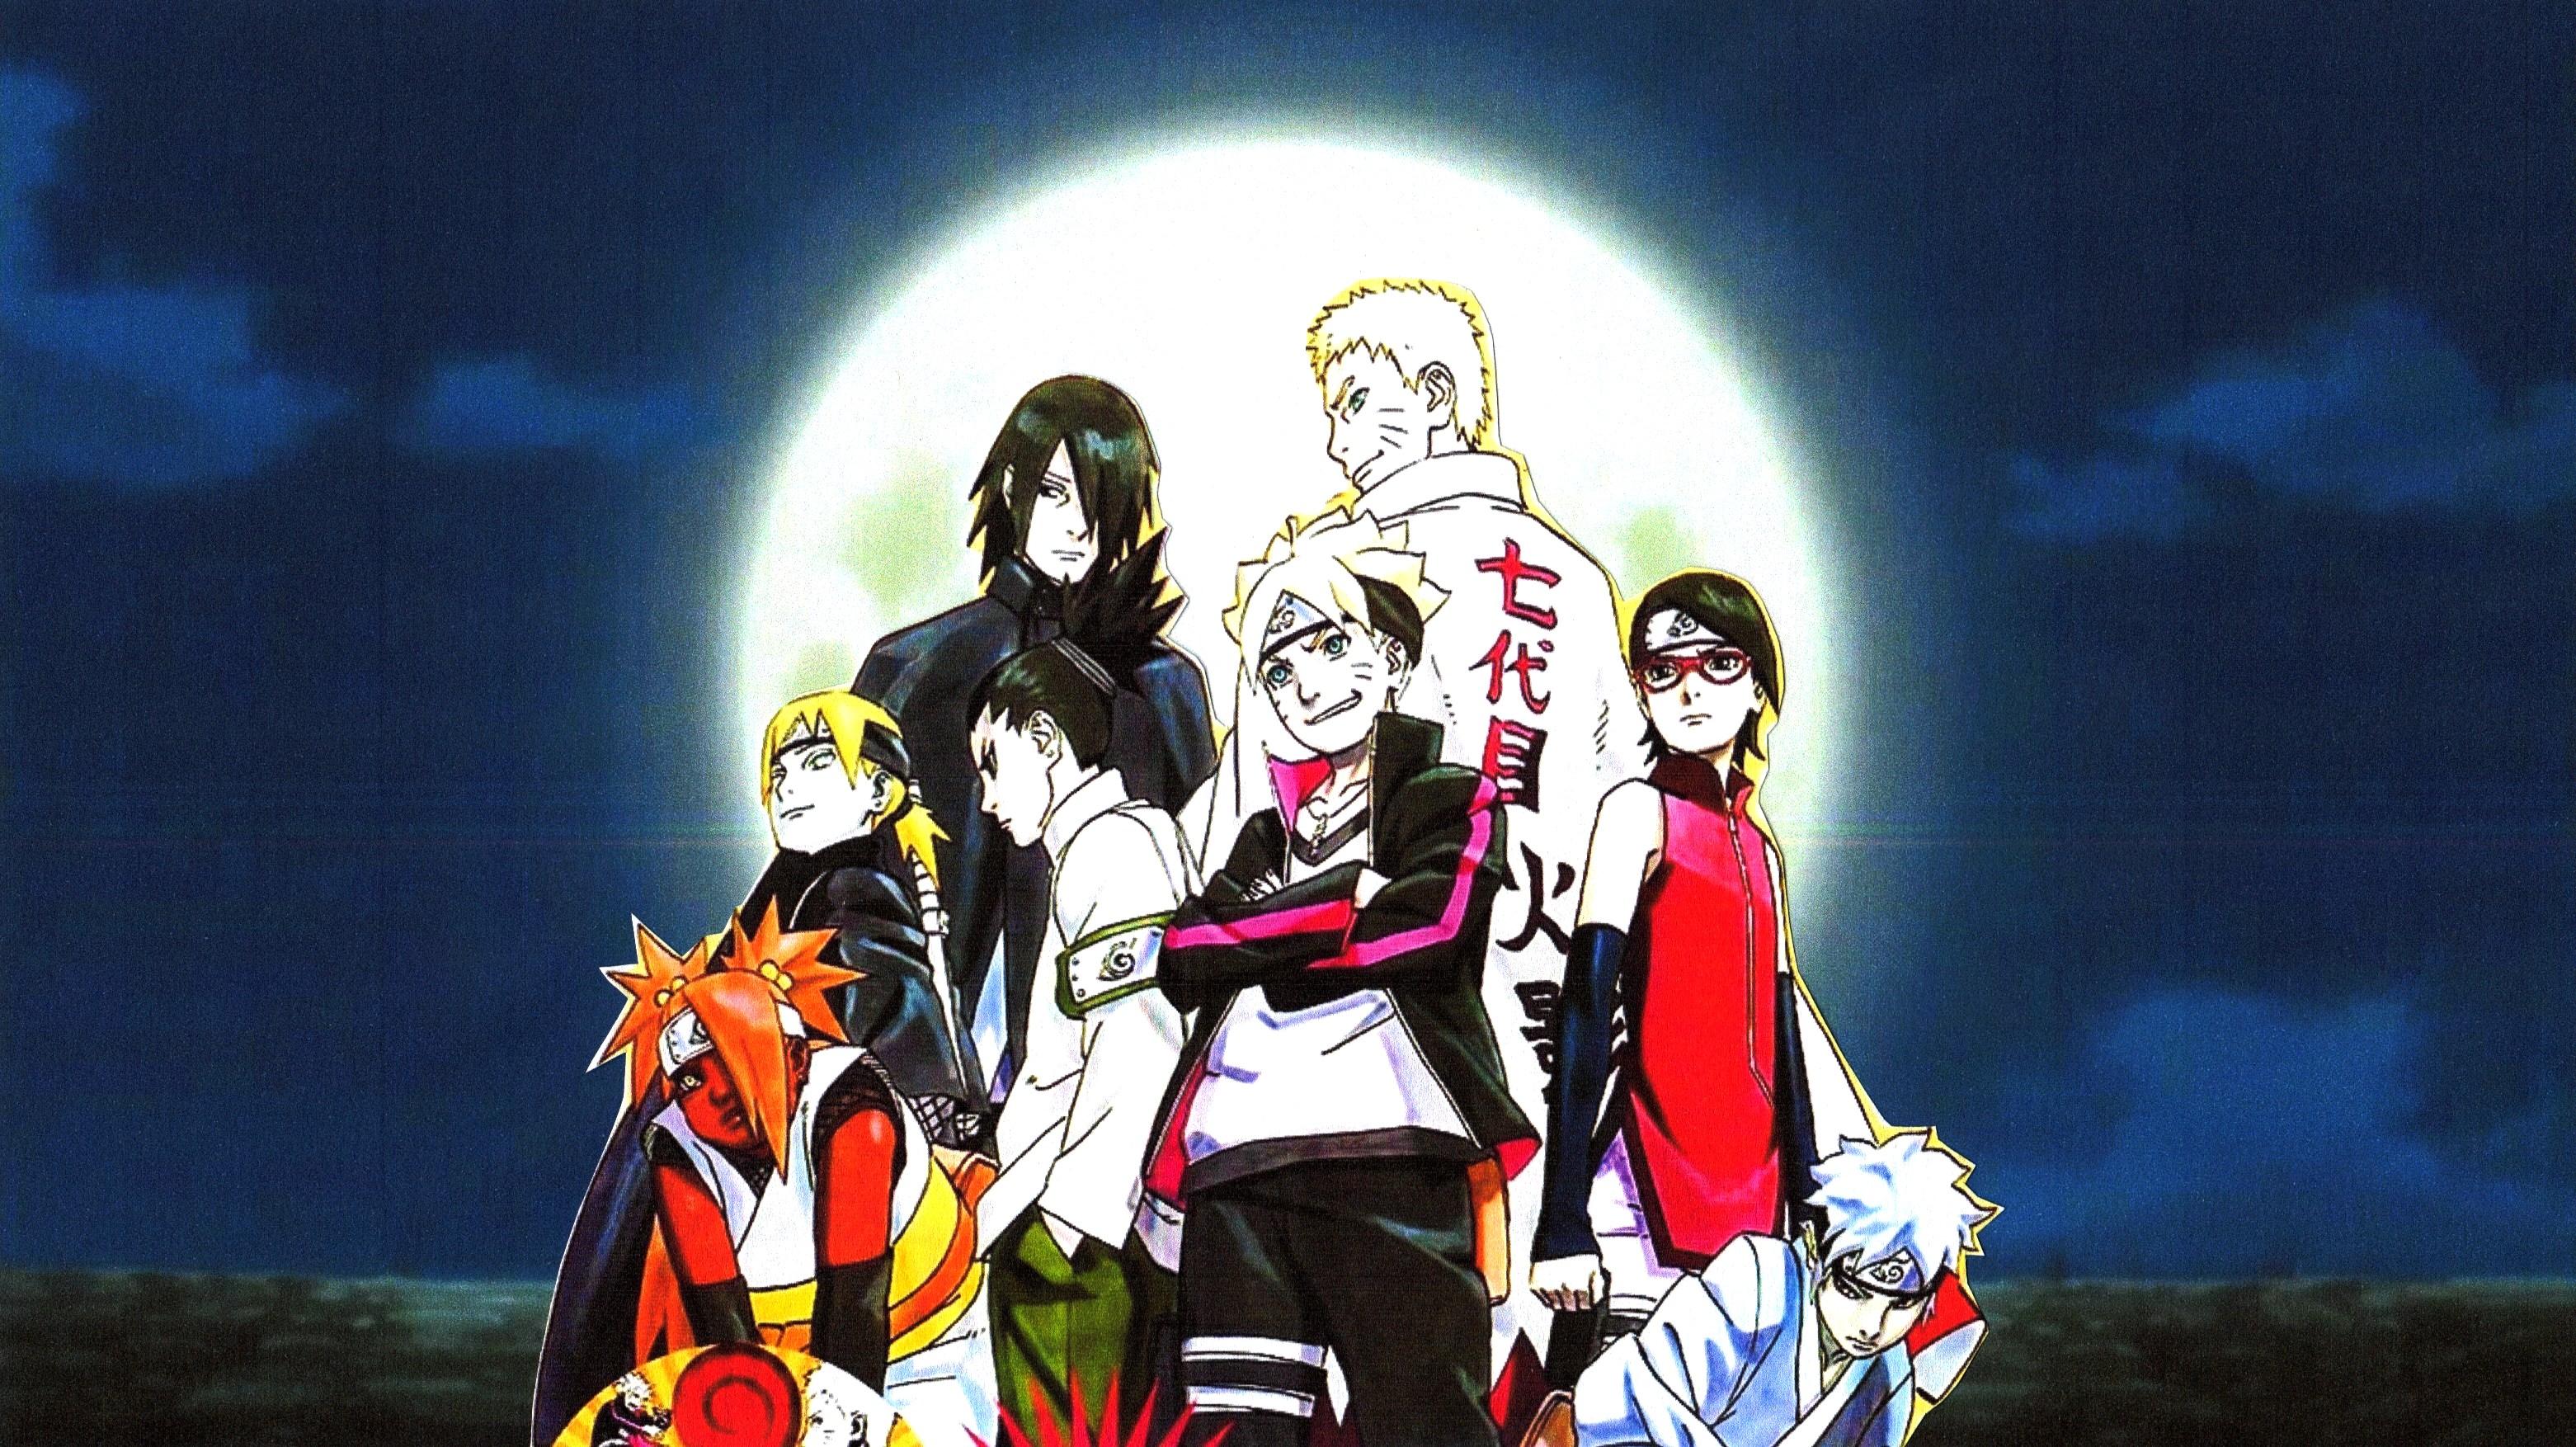 Boruto - Naruto the Movie - Cover  Naruto the movie, Naruto and sasuke  wallpaper, Movie covers